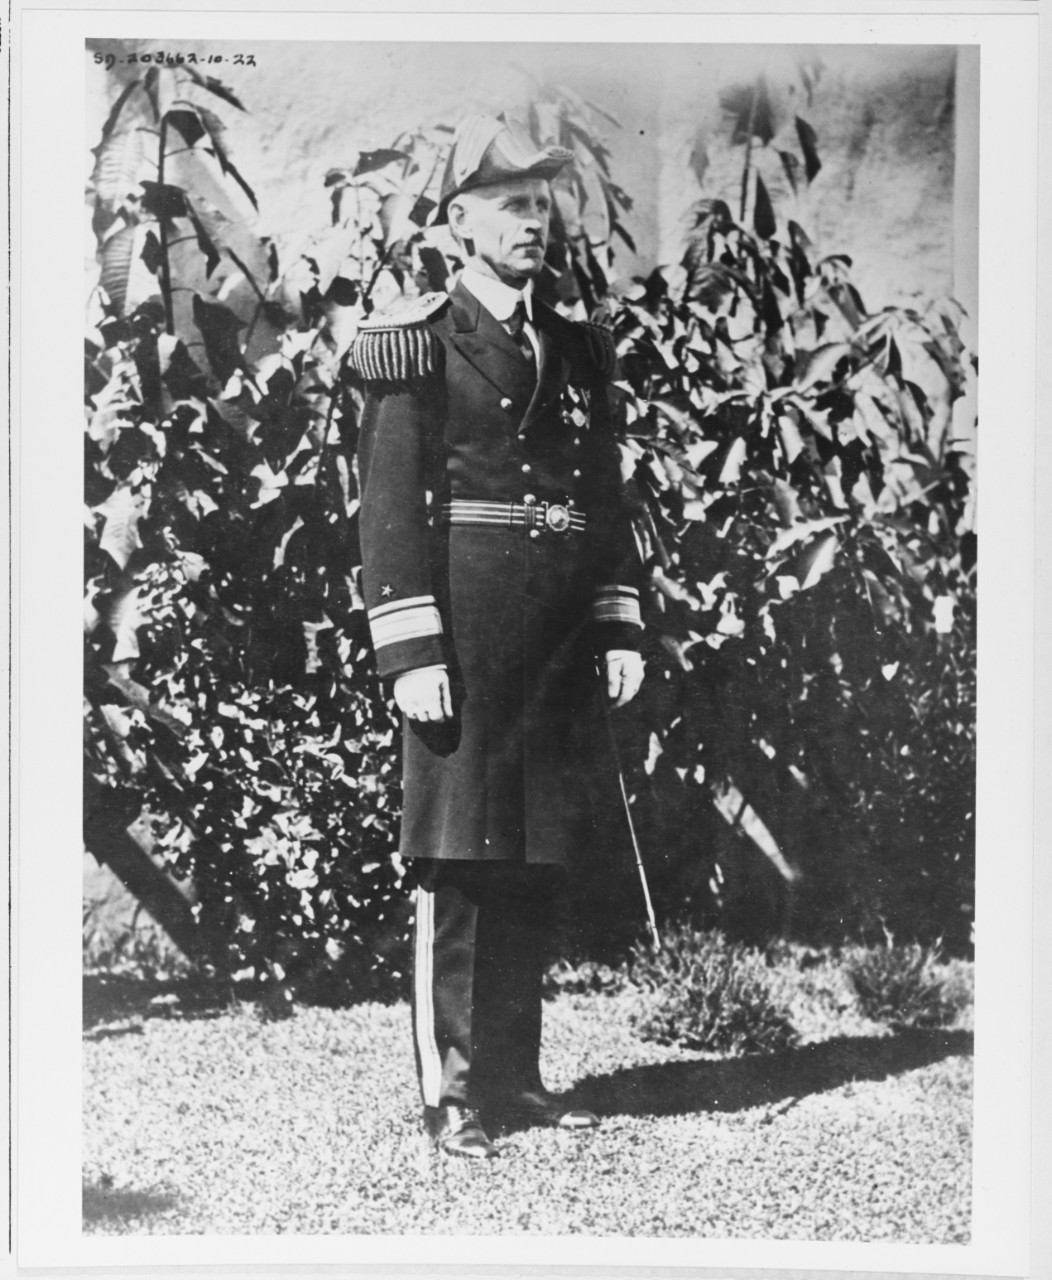 Rear Admiral G. H. Burrage, USN